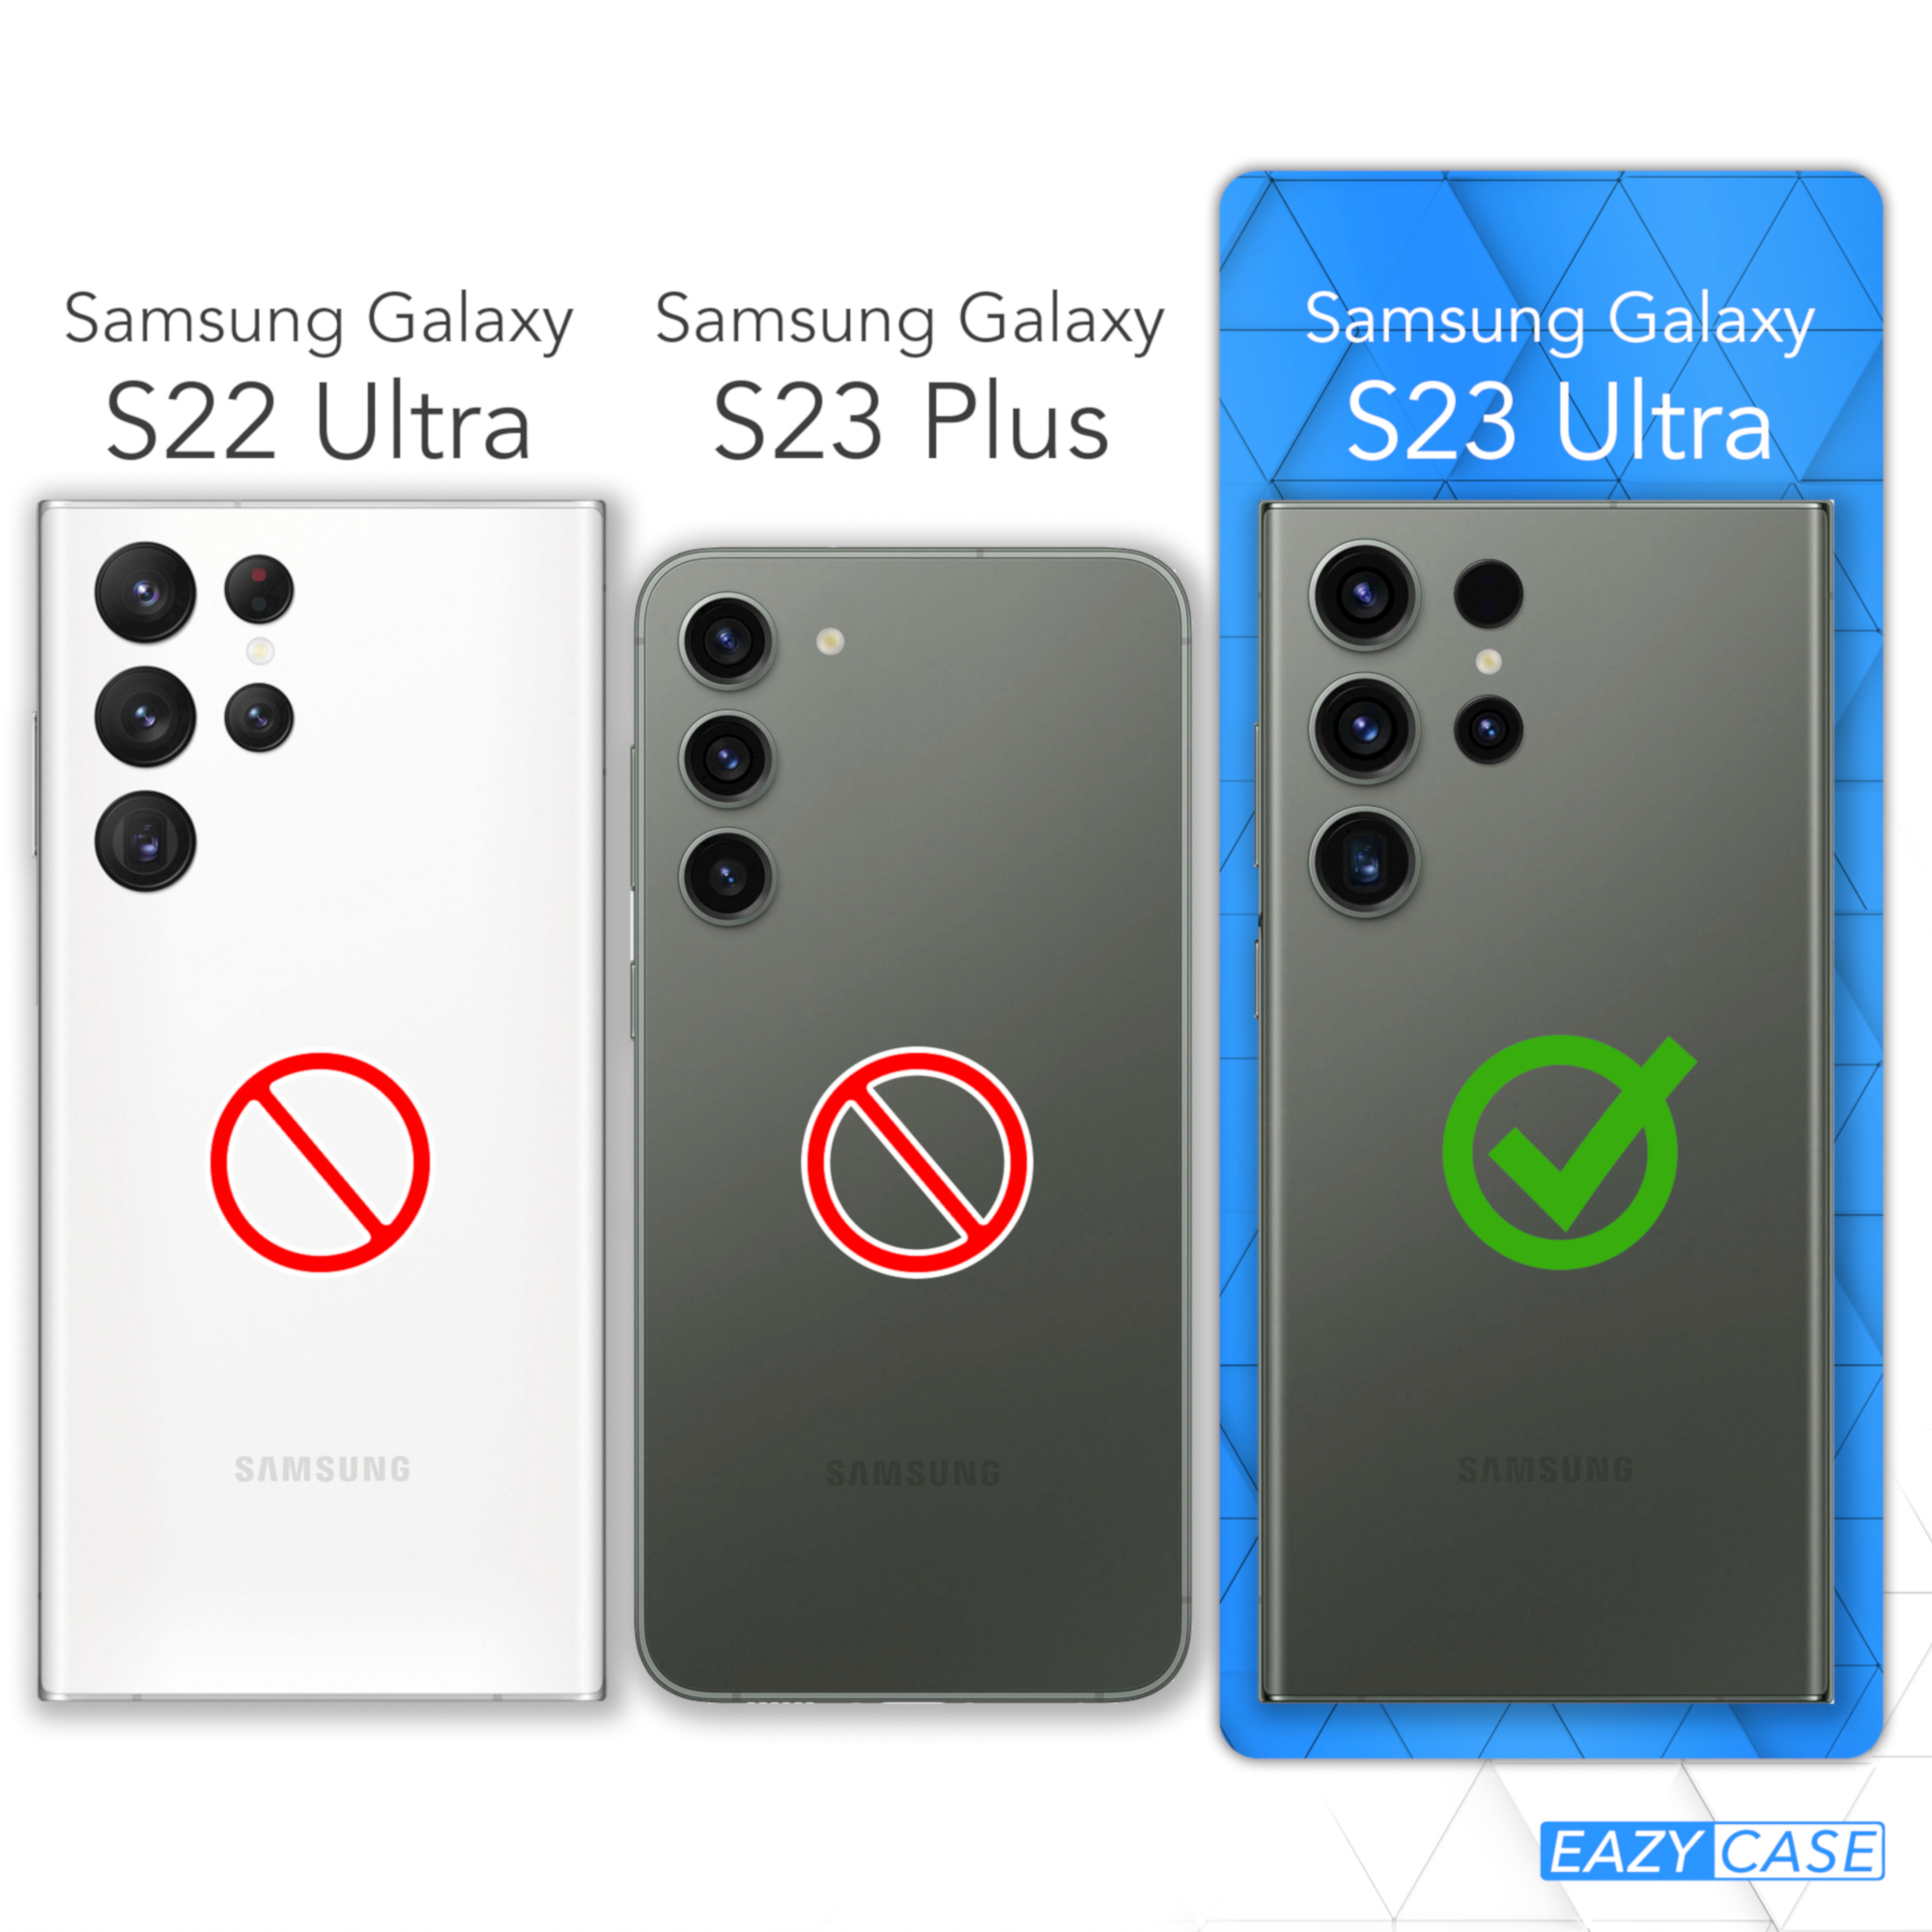 EAZY CASE Premium Silikon Handycase, Galaxy Weiß S23 Samsung, Ultra, Backcover